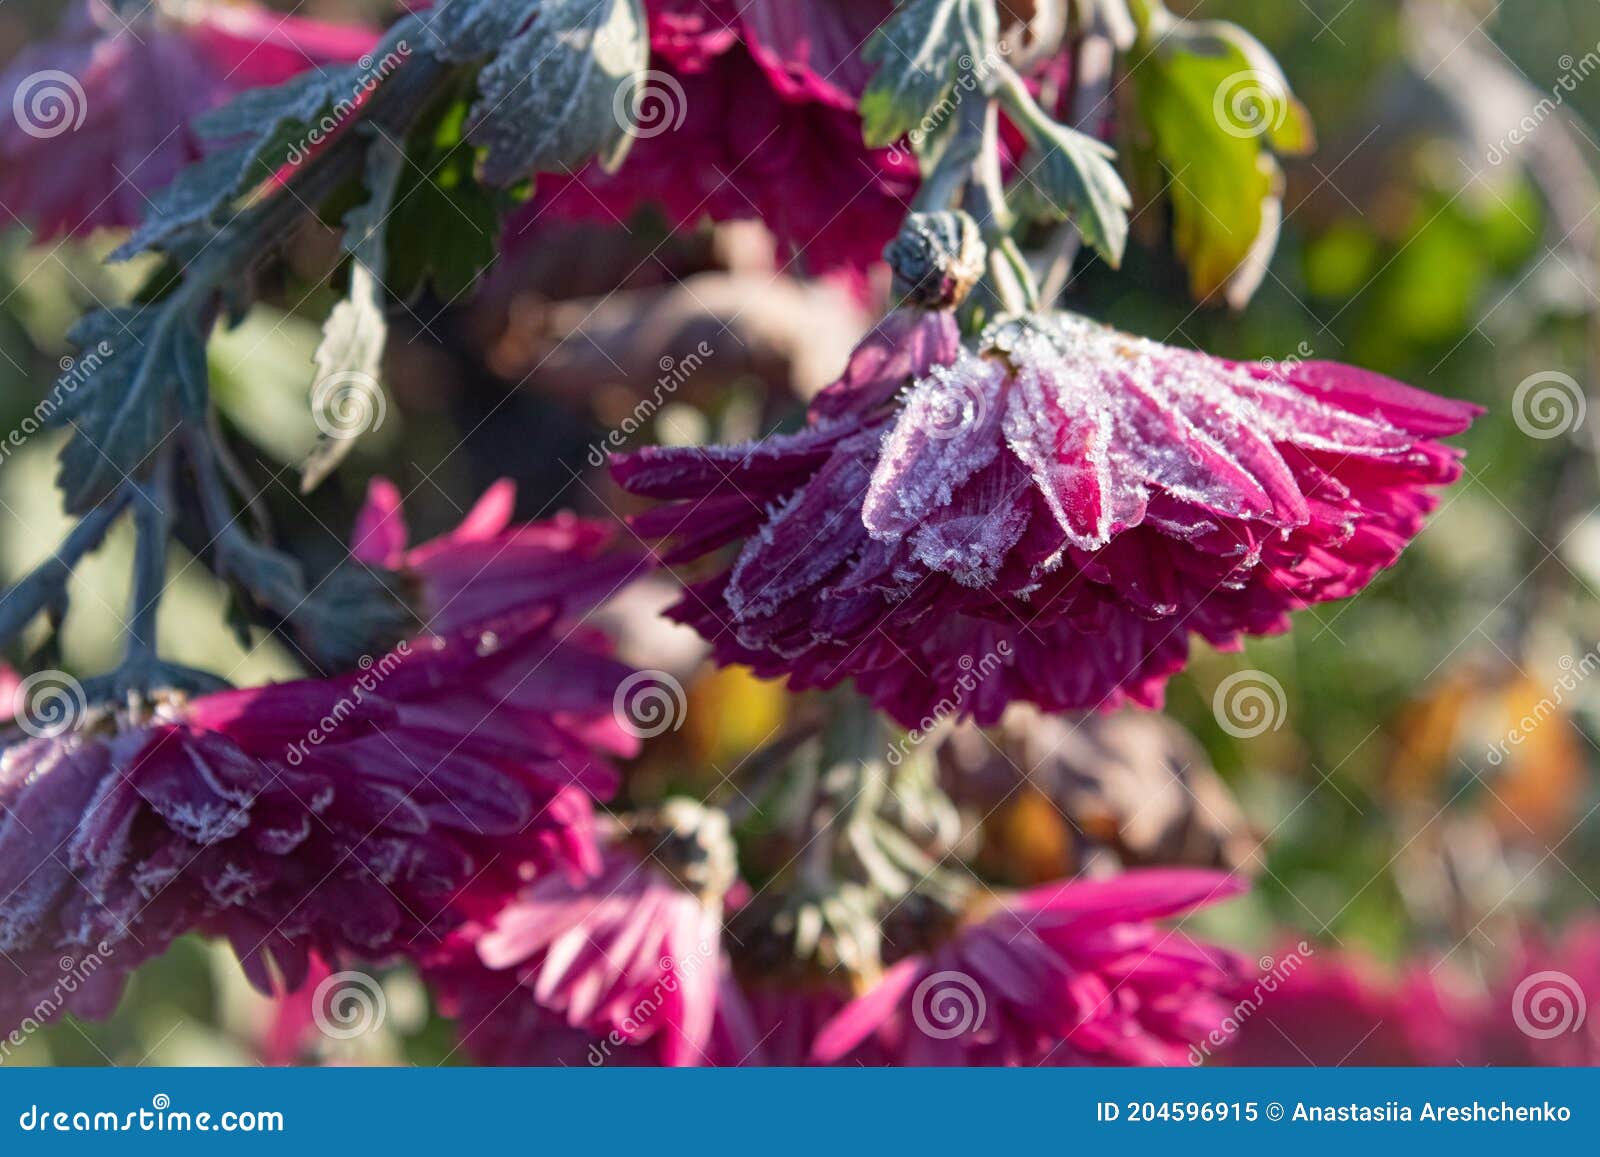 frozen raspberry chrysanthemum bush with any ingest on petals